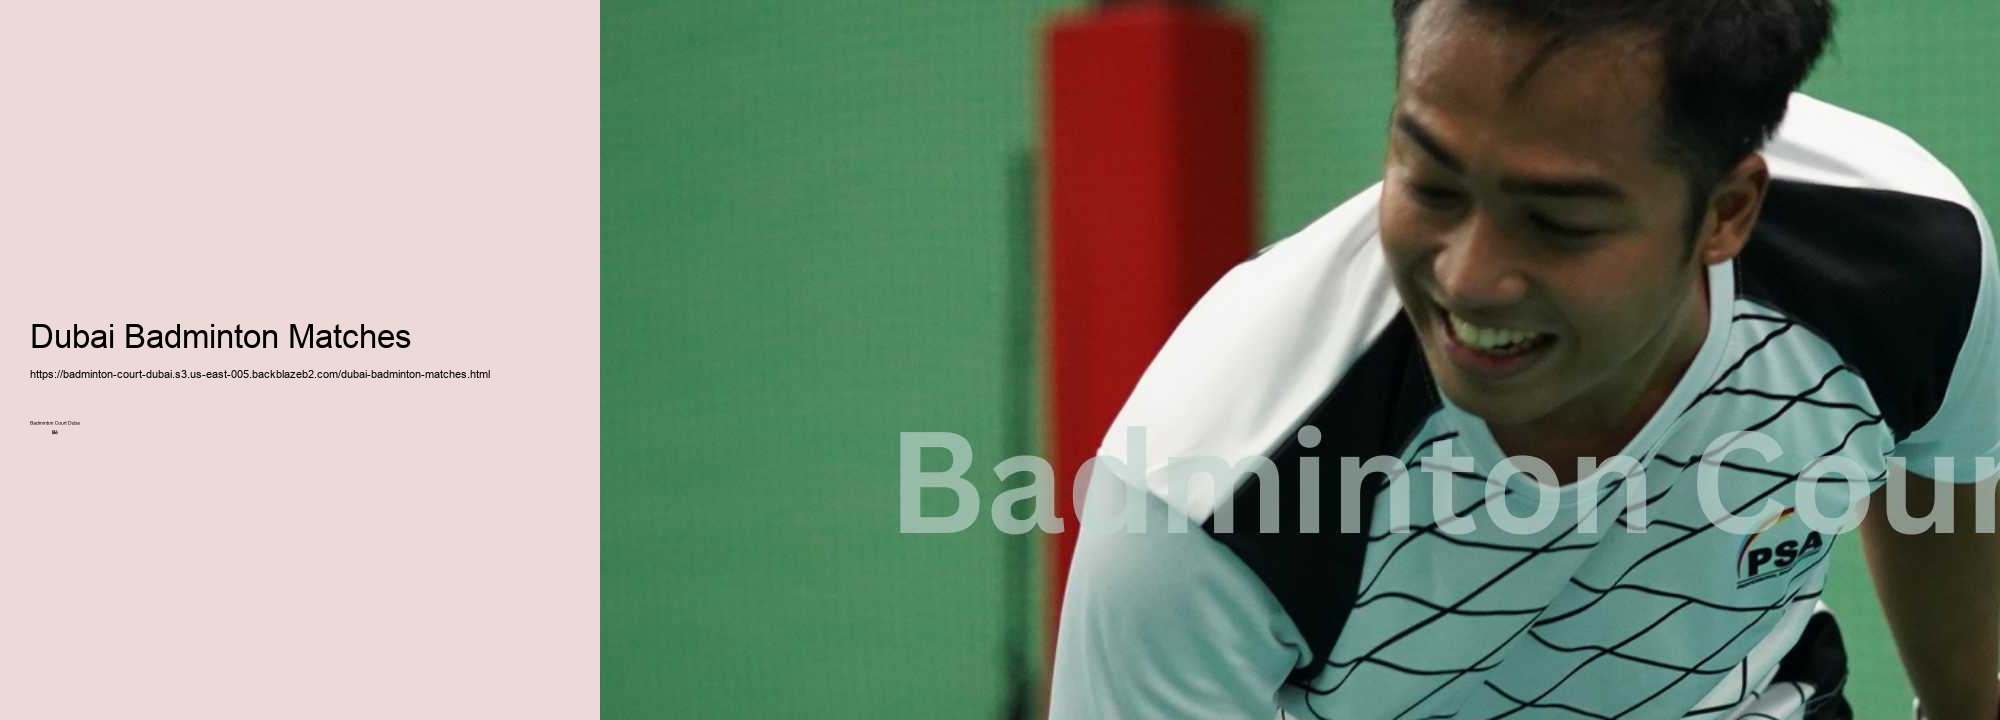 Dubai Badminton Matches